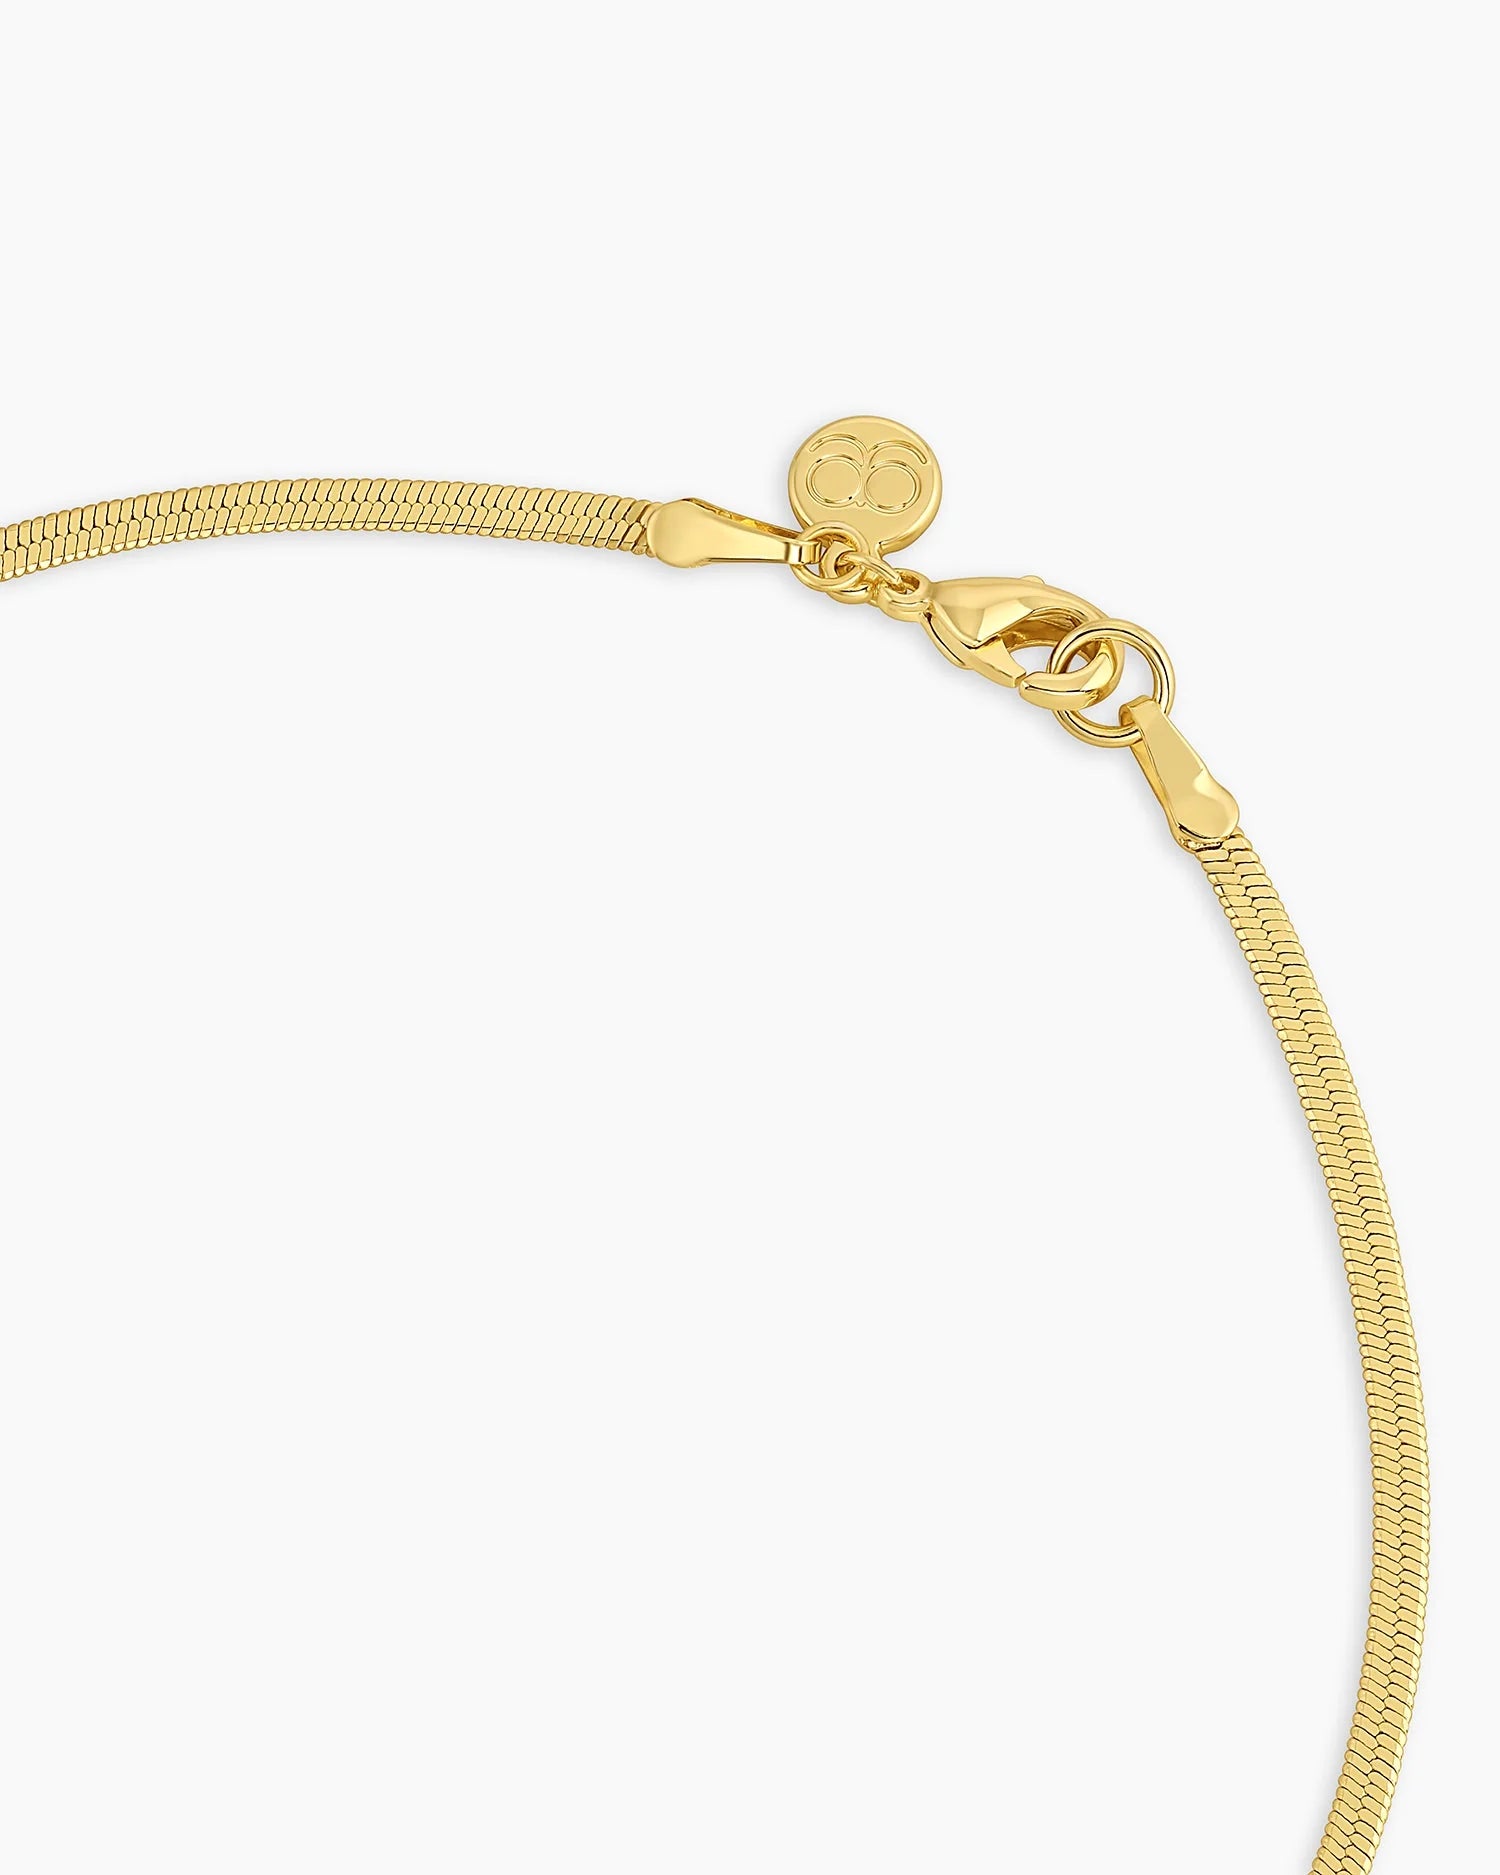 Venice mini necklace - gold